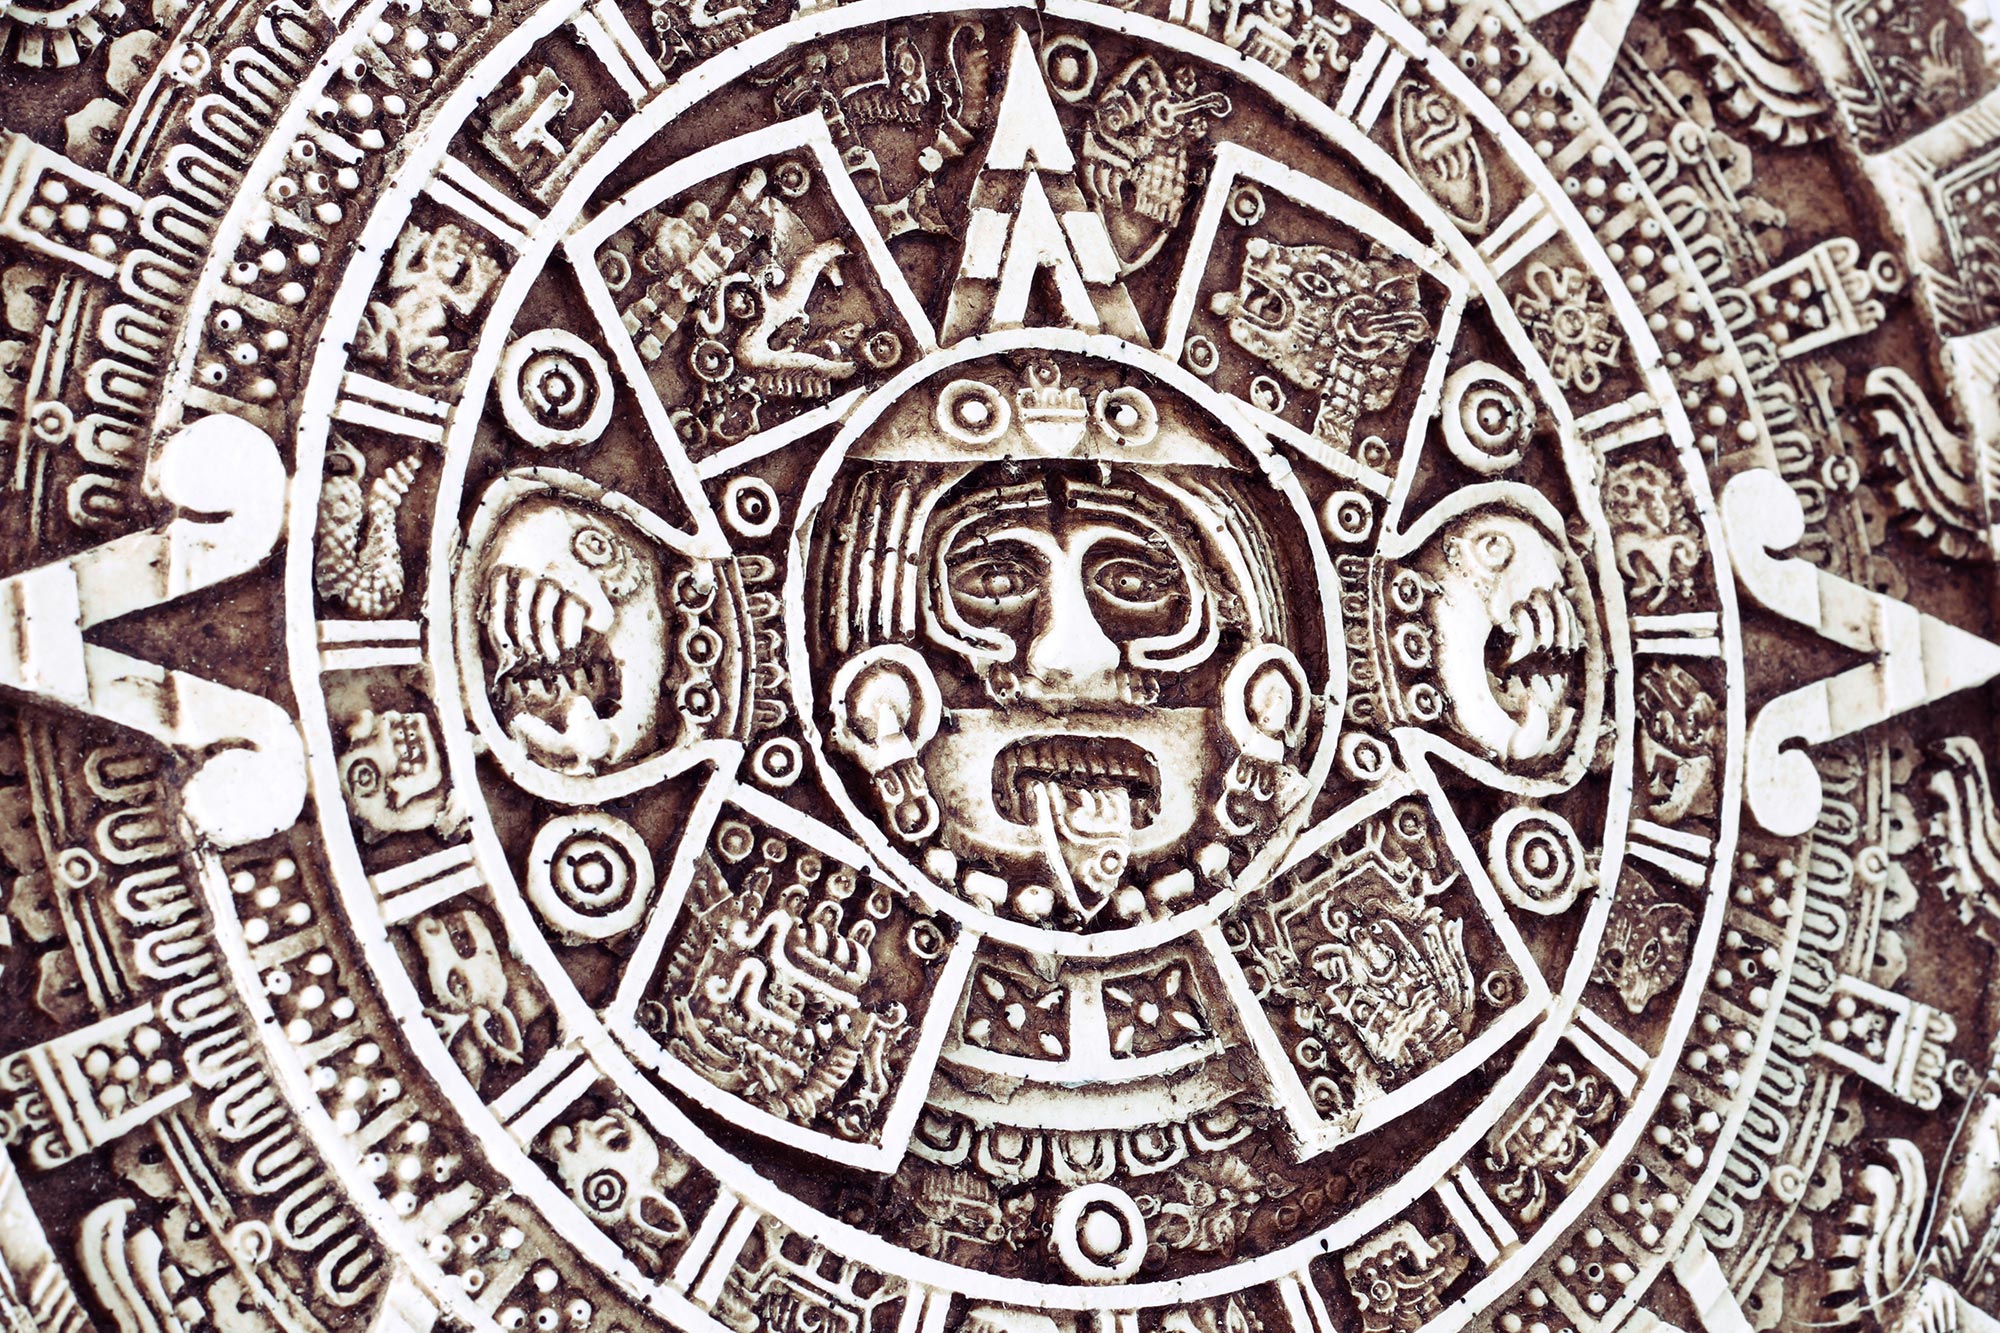 real mayan calendar found